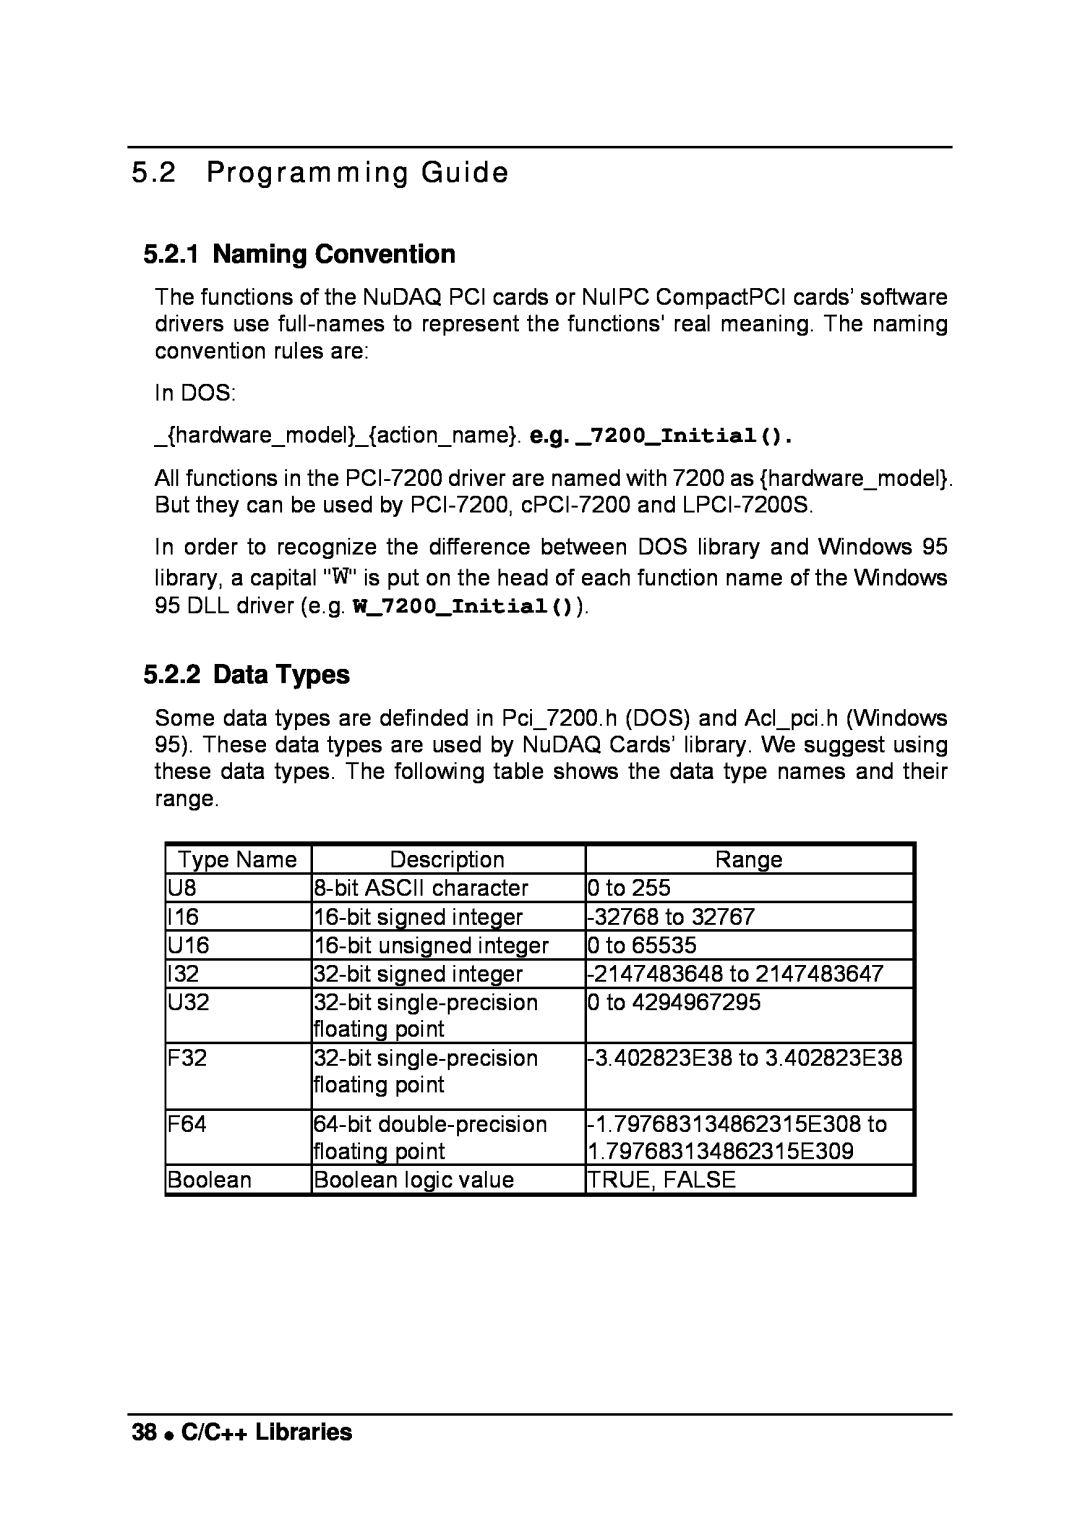 Intel LPCI-7200S manual Programming Guide, Naming Convention, Data Types, 38 C/C++ Libraries 